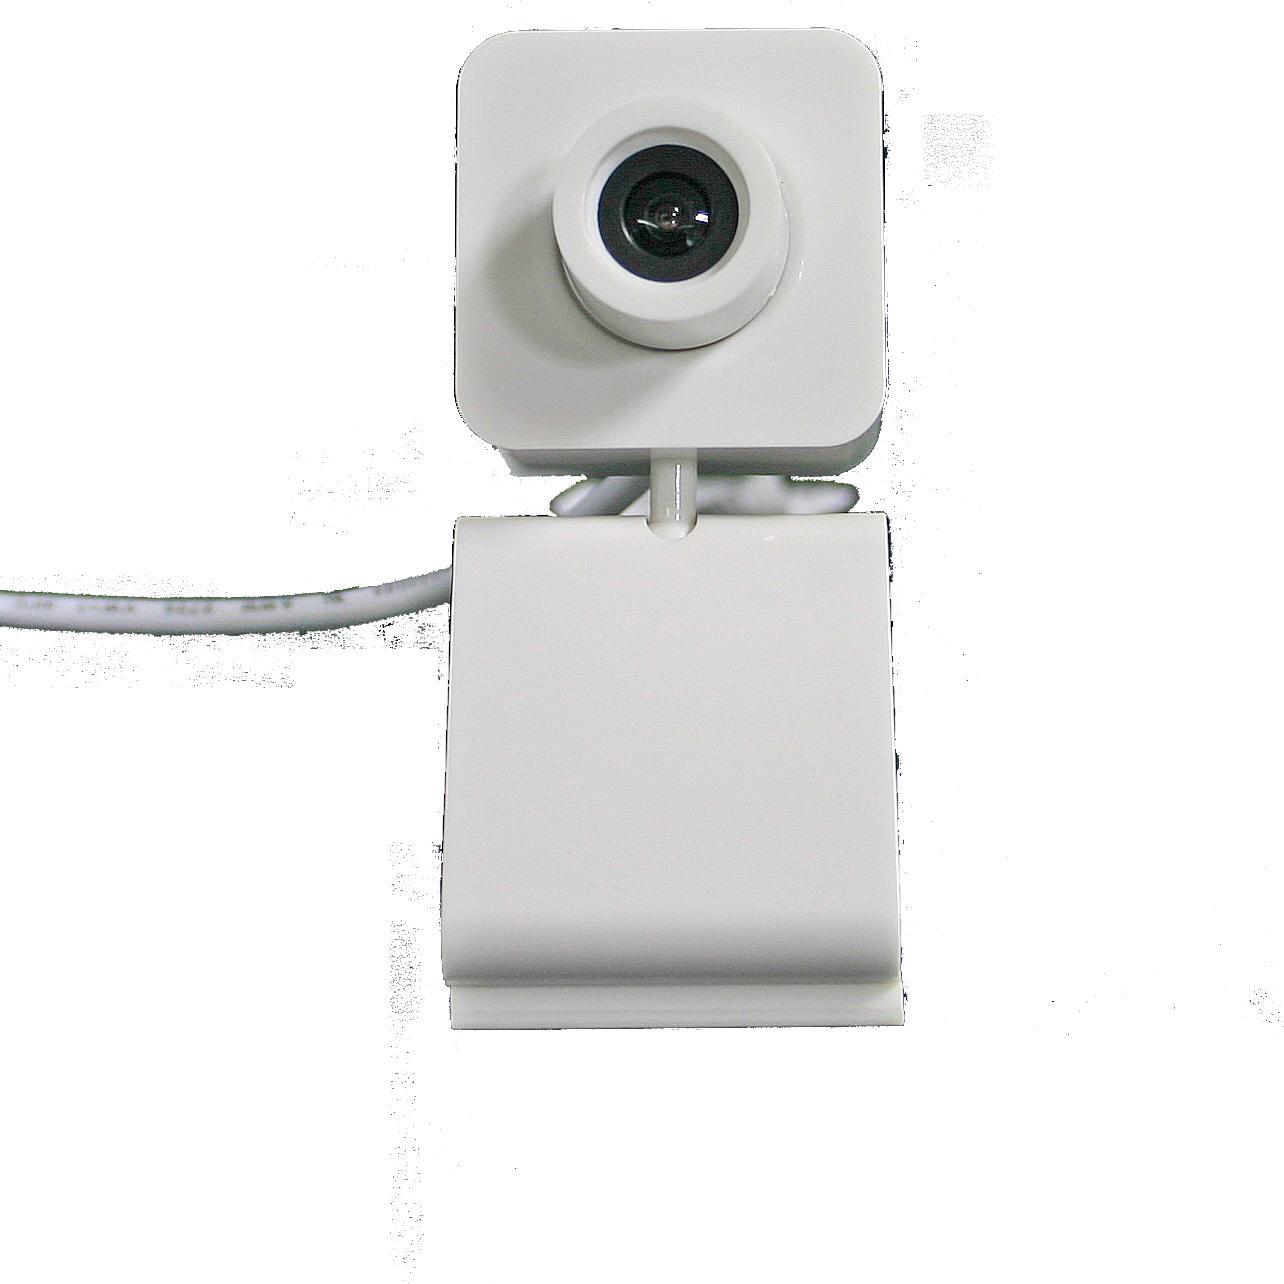 USB Κάμερα YUANDIAO με Μικρόφωνο Hyundai (ExperTS) White No Need Driver